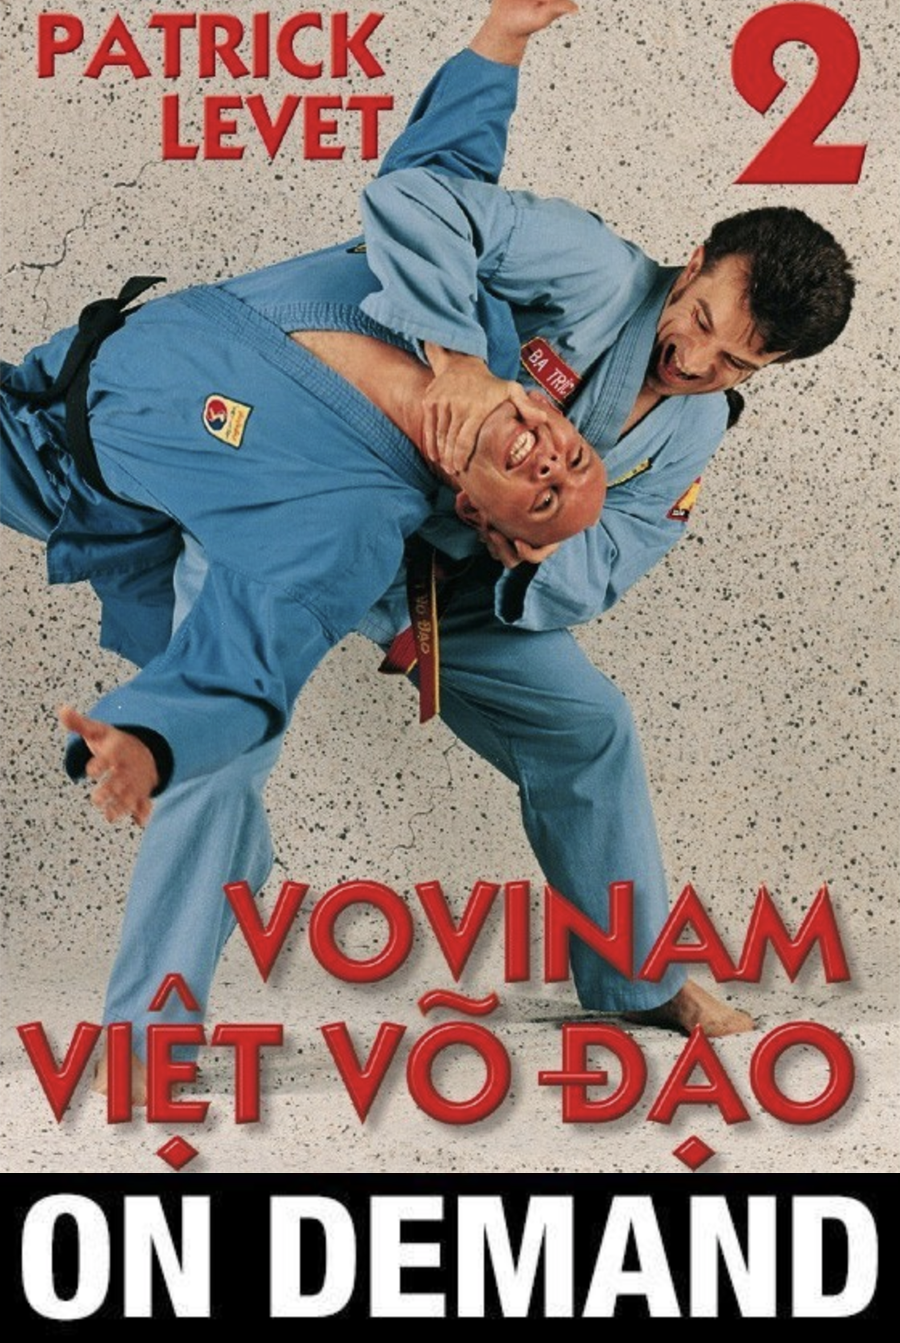 Vovinam Viet Vo Dao Vol 2 with Patrick Levet (On Demand) - Budovideos